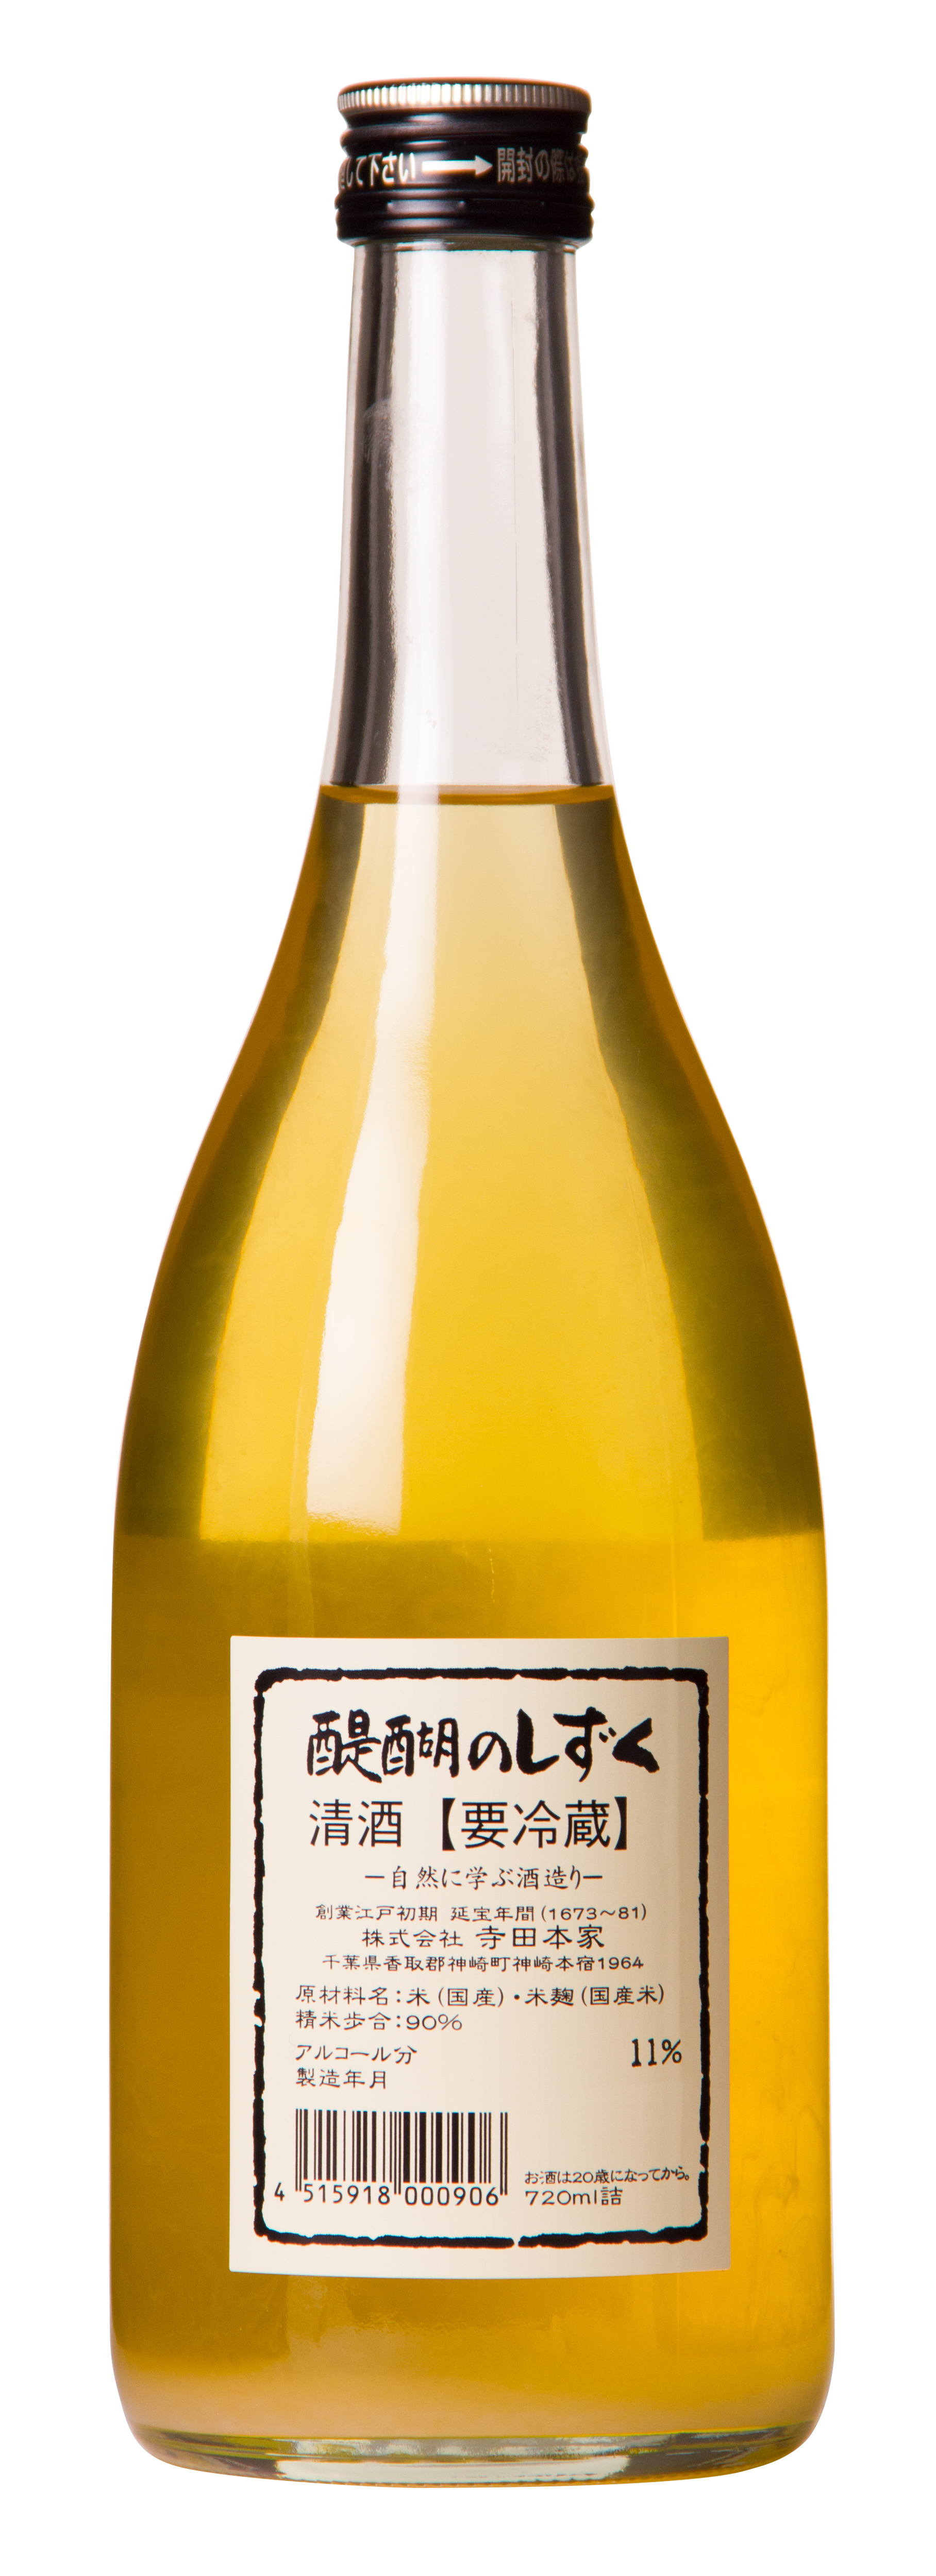 Kamenoo Sake, Terada Honke - Le Passeur de Vin